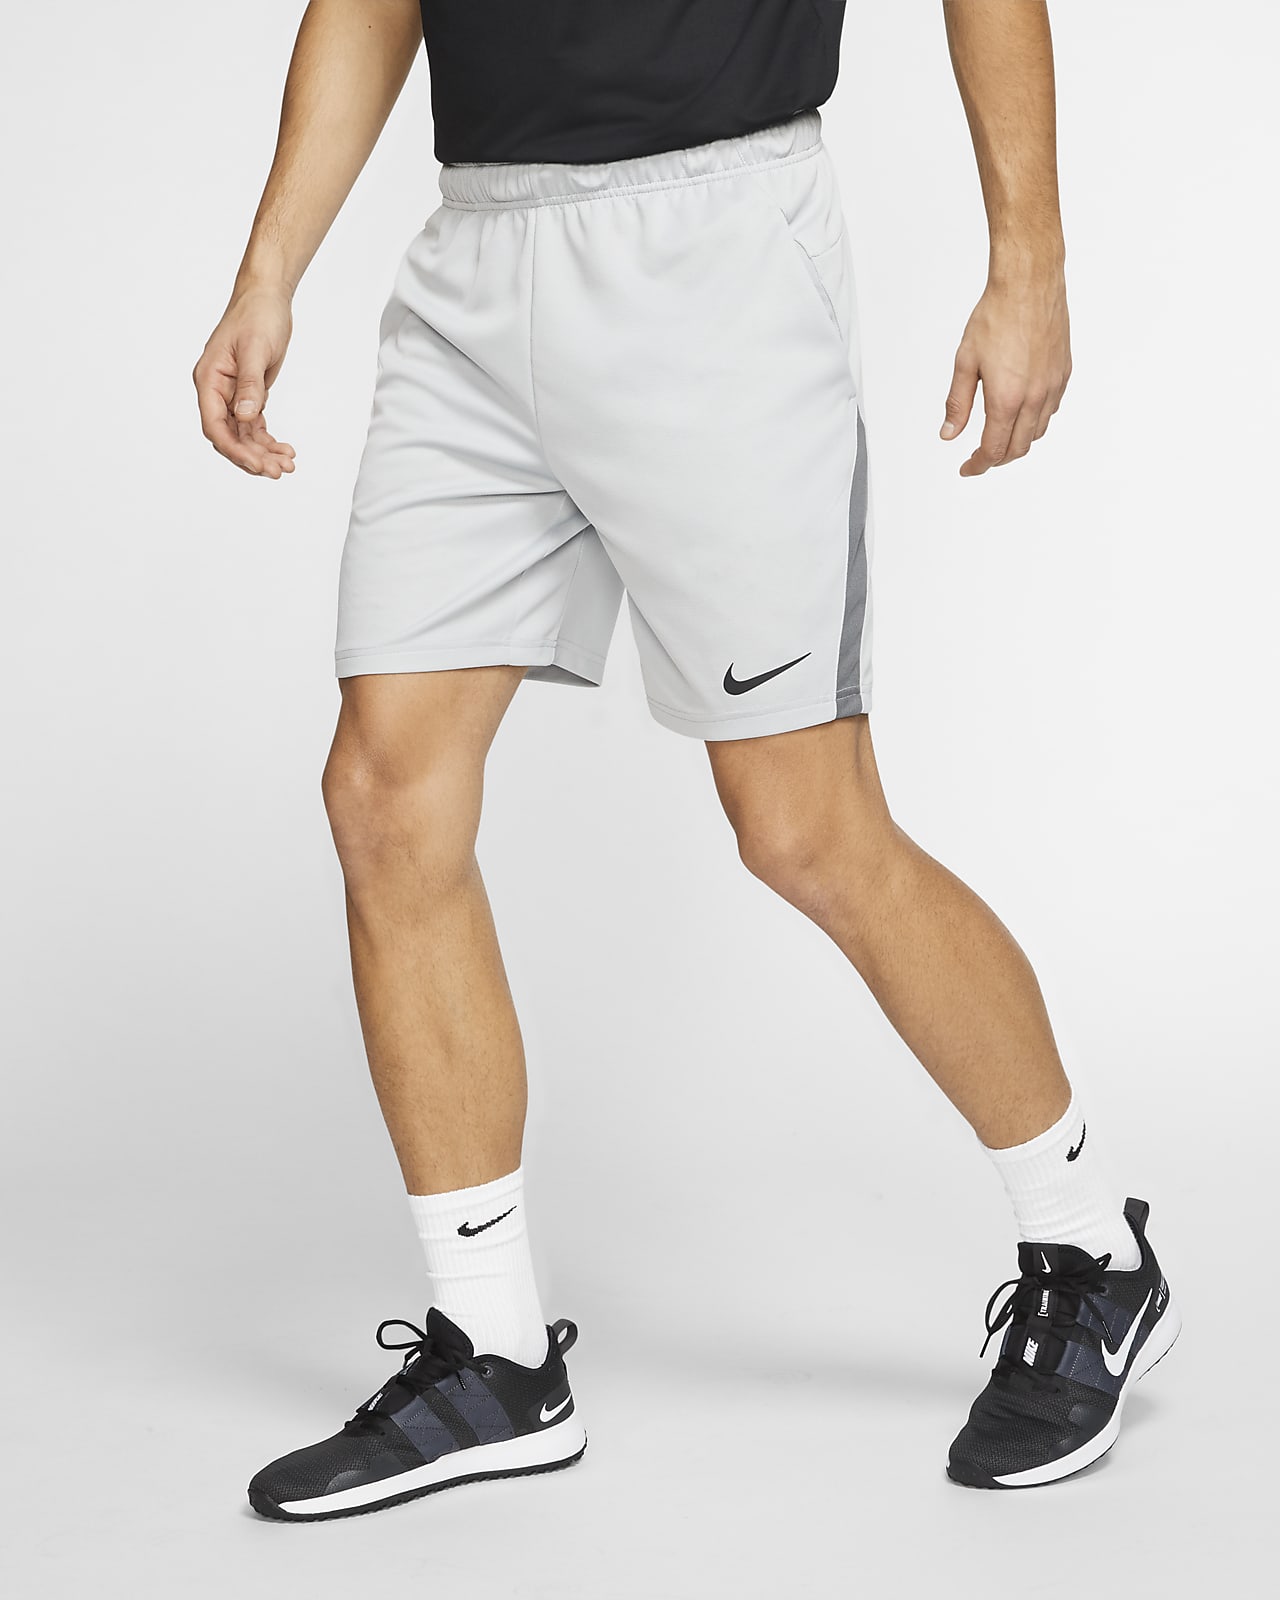 forskellige høj hverdagskost Nike Dri-FIT Men's Knit Training Shorts. Nike.com